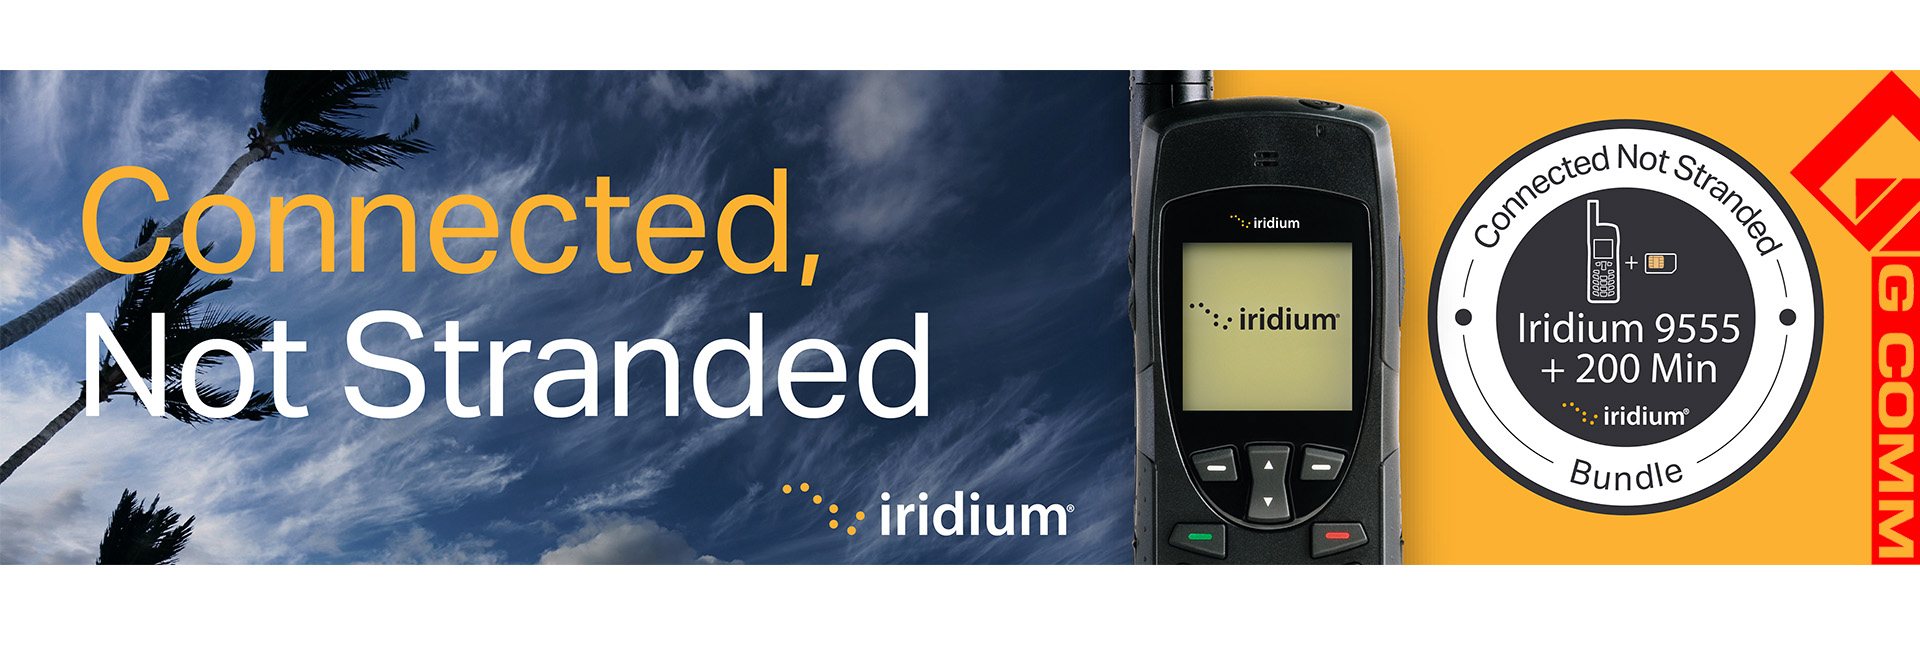 Iridium Connected not stranded